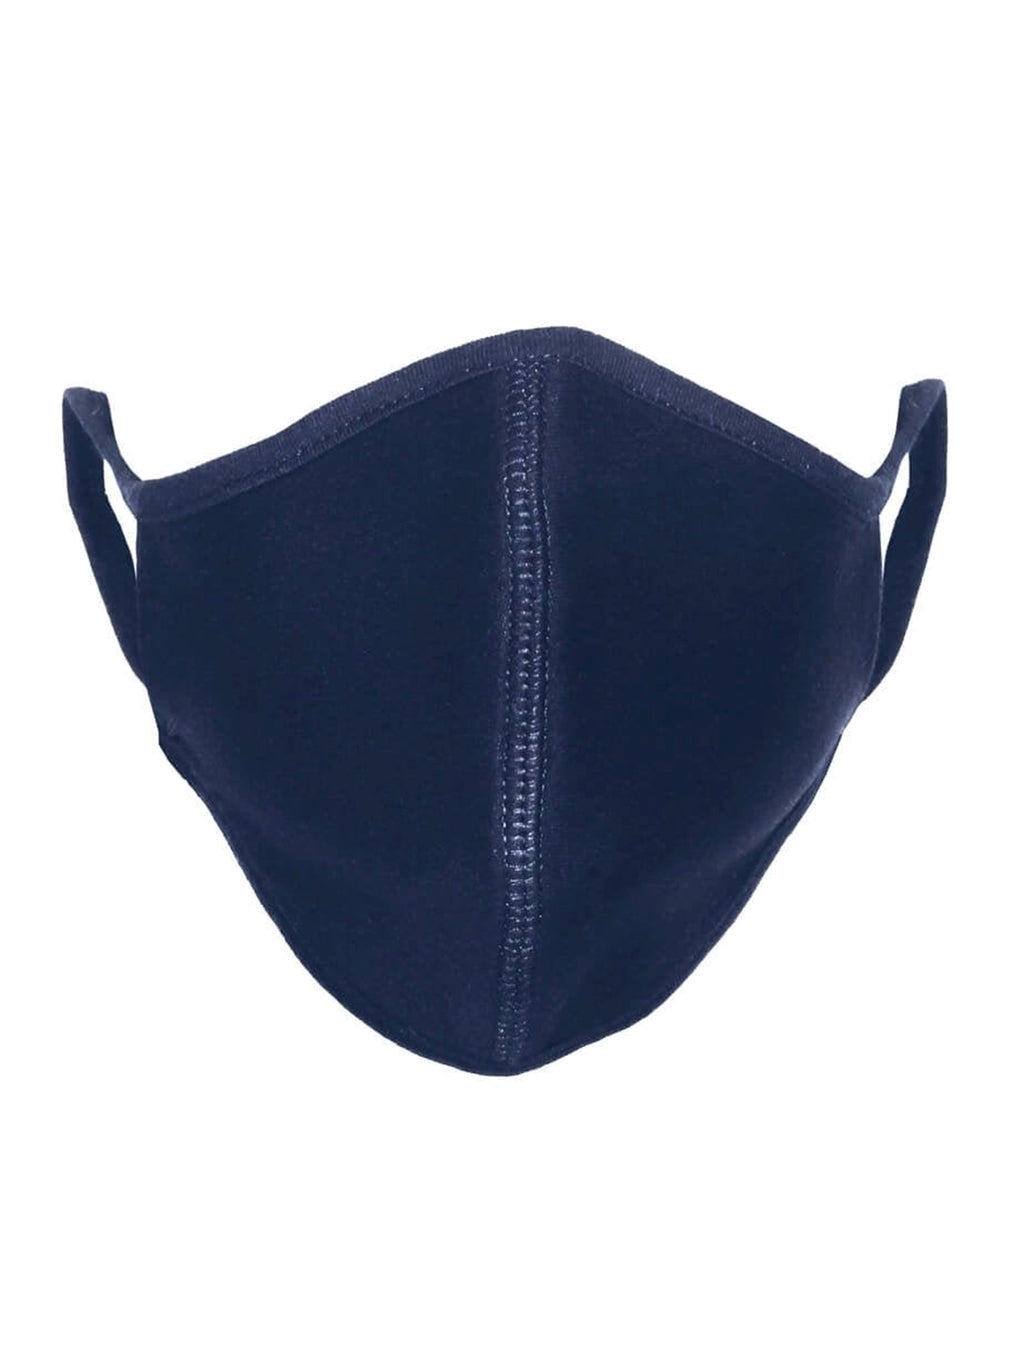 Cloth mask - Navy (organic cotton)